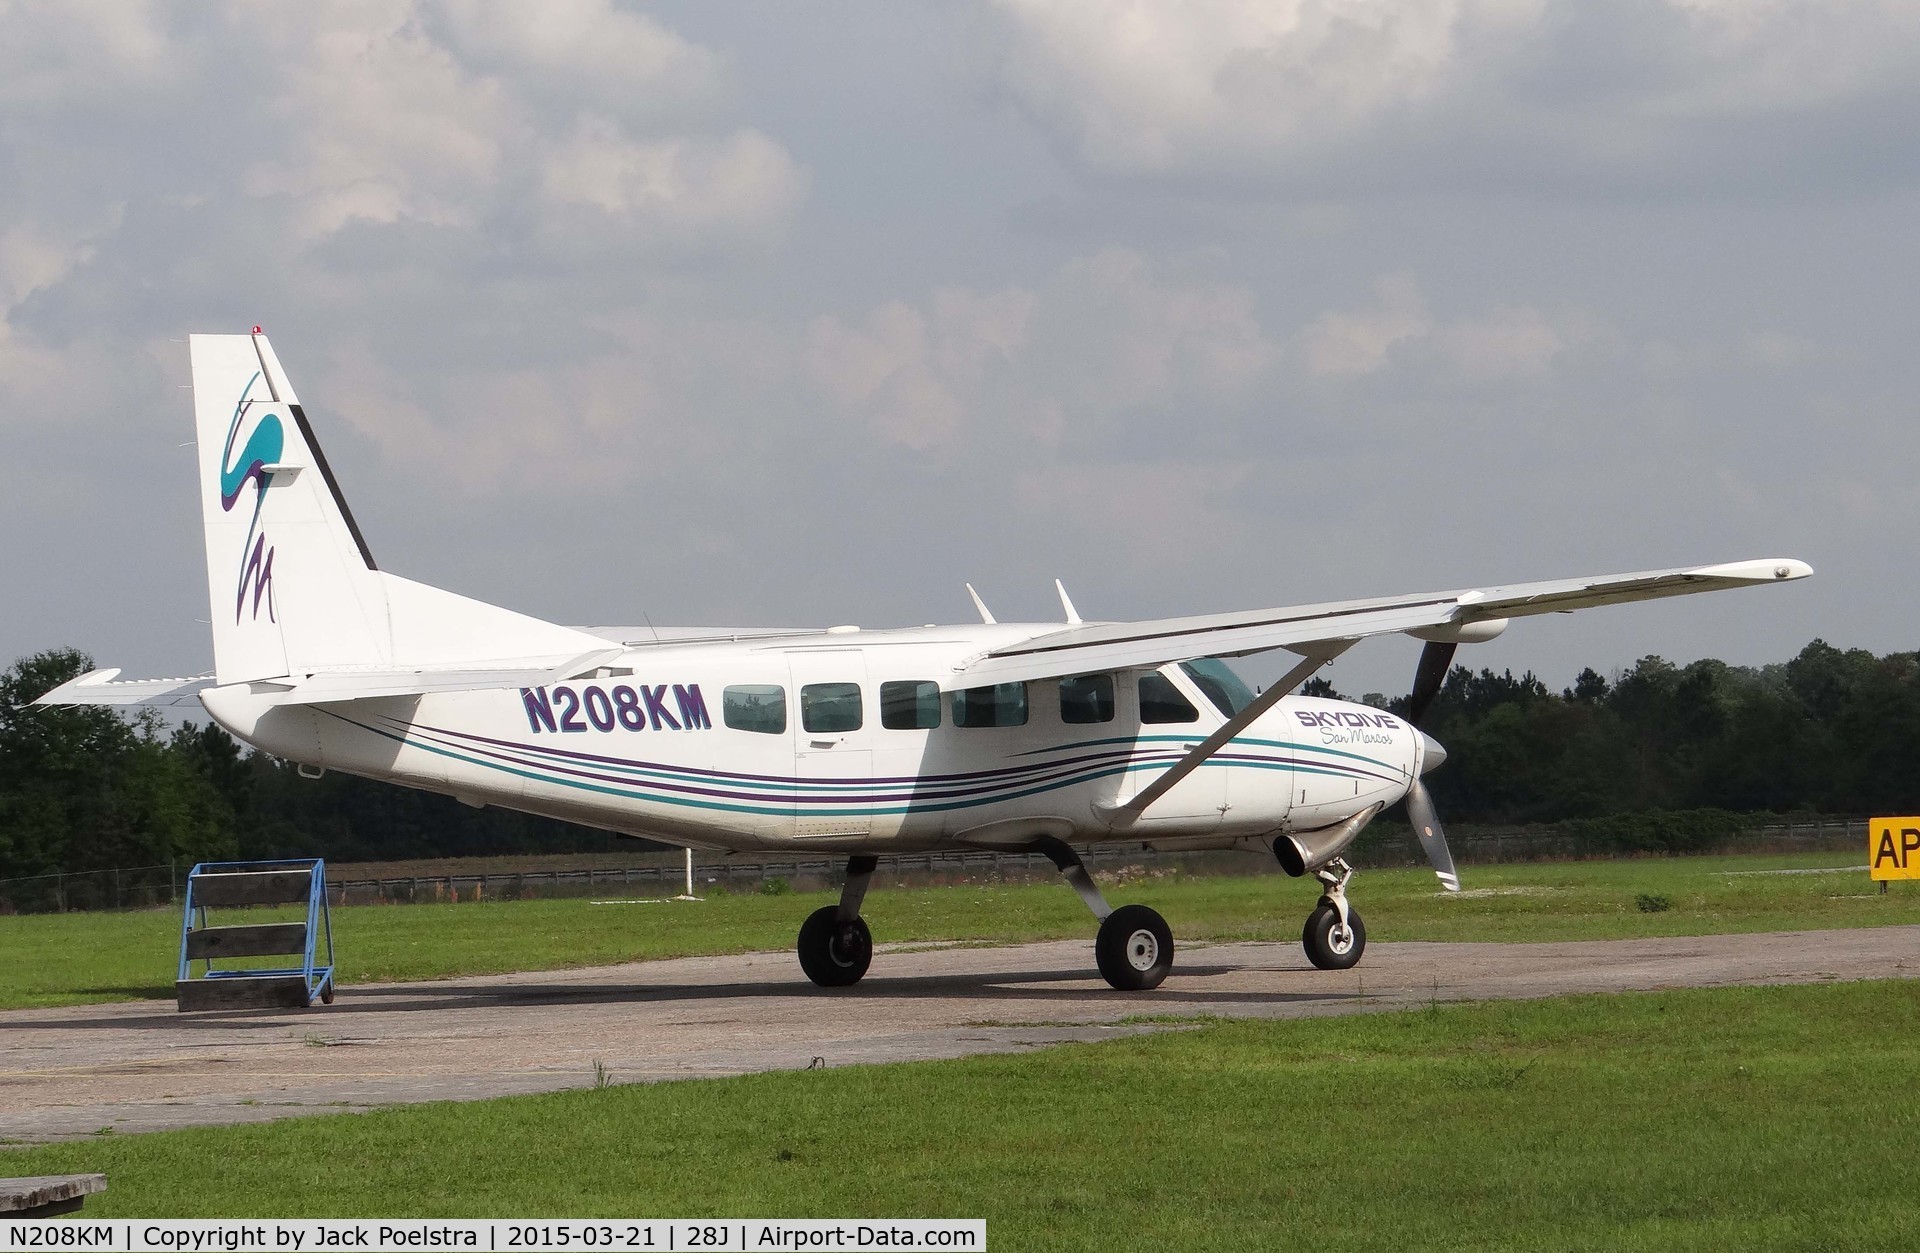 N208KM, 1989 Cessna 208 Caravan I C/N 20800150, C.208 of Skydive San Marcos at Palatka Airport Fla.